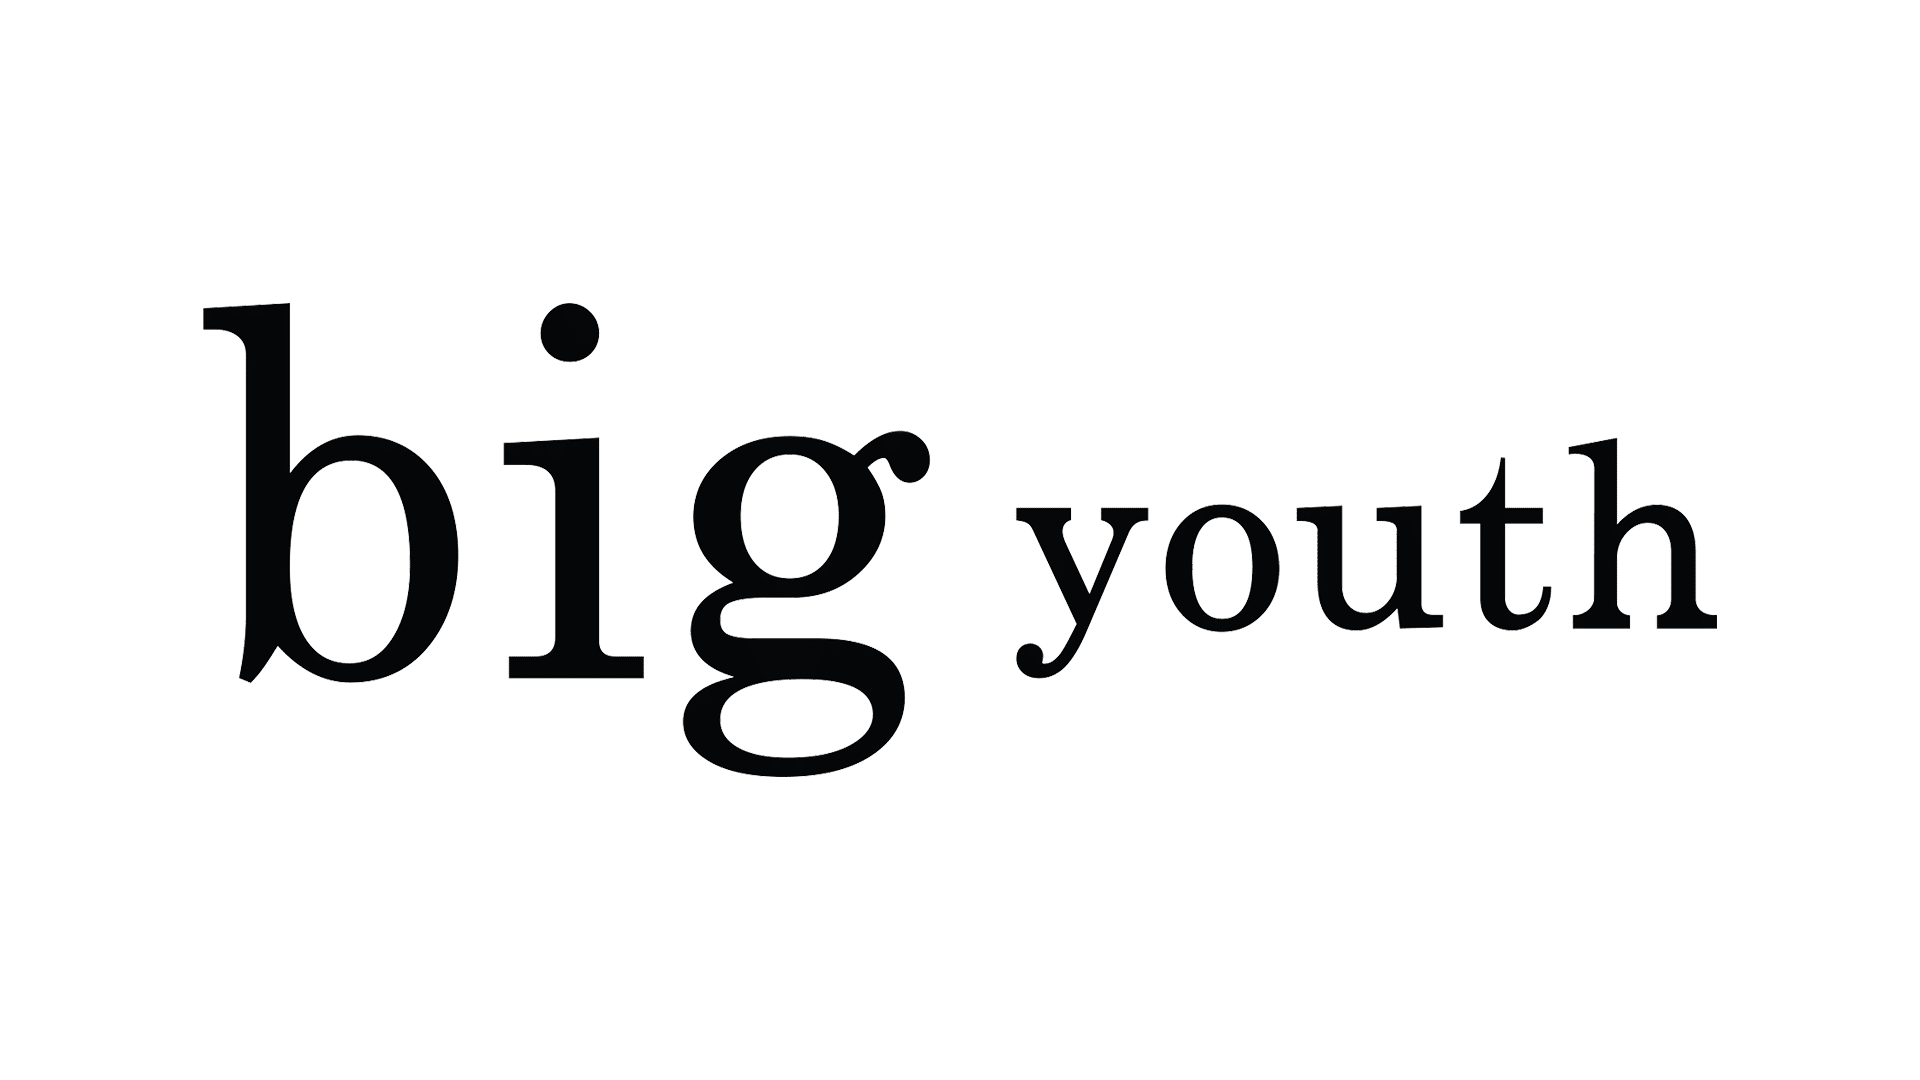 logobig youth1599666176 - Entreprise de nettoyage Paris 4 - [Hnet]